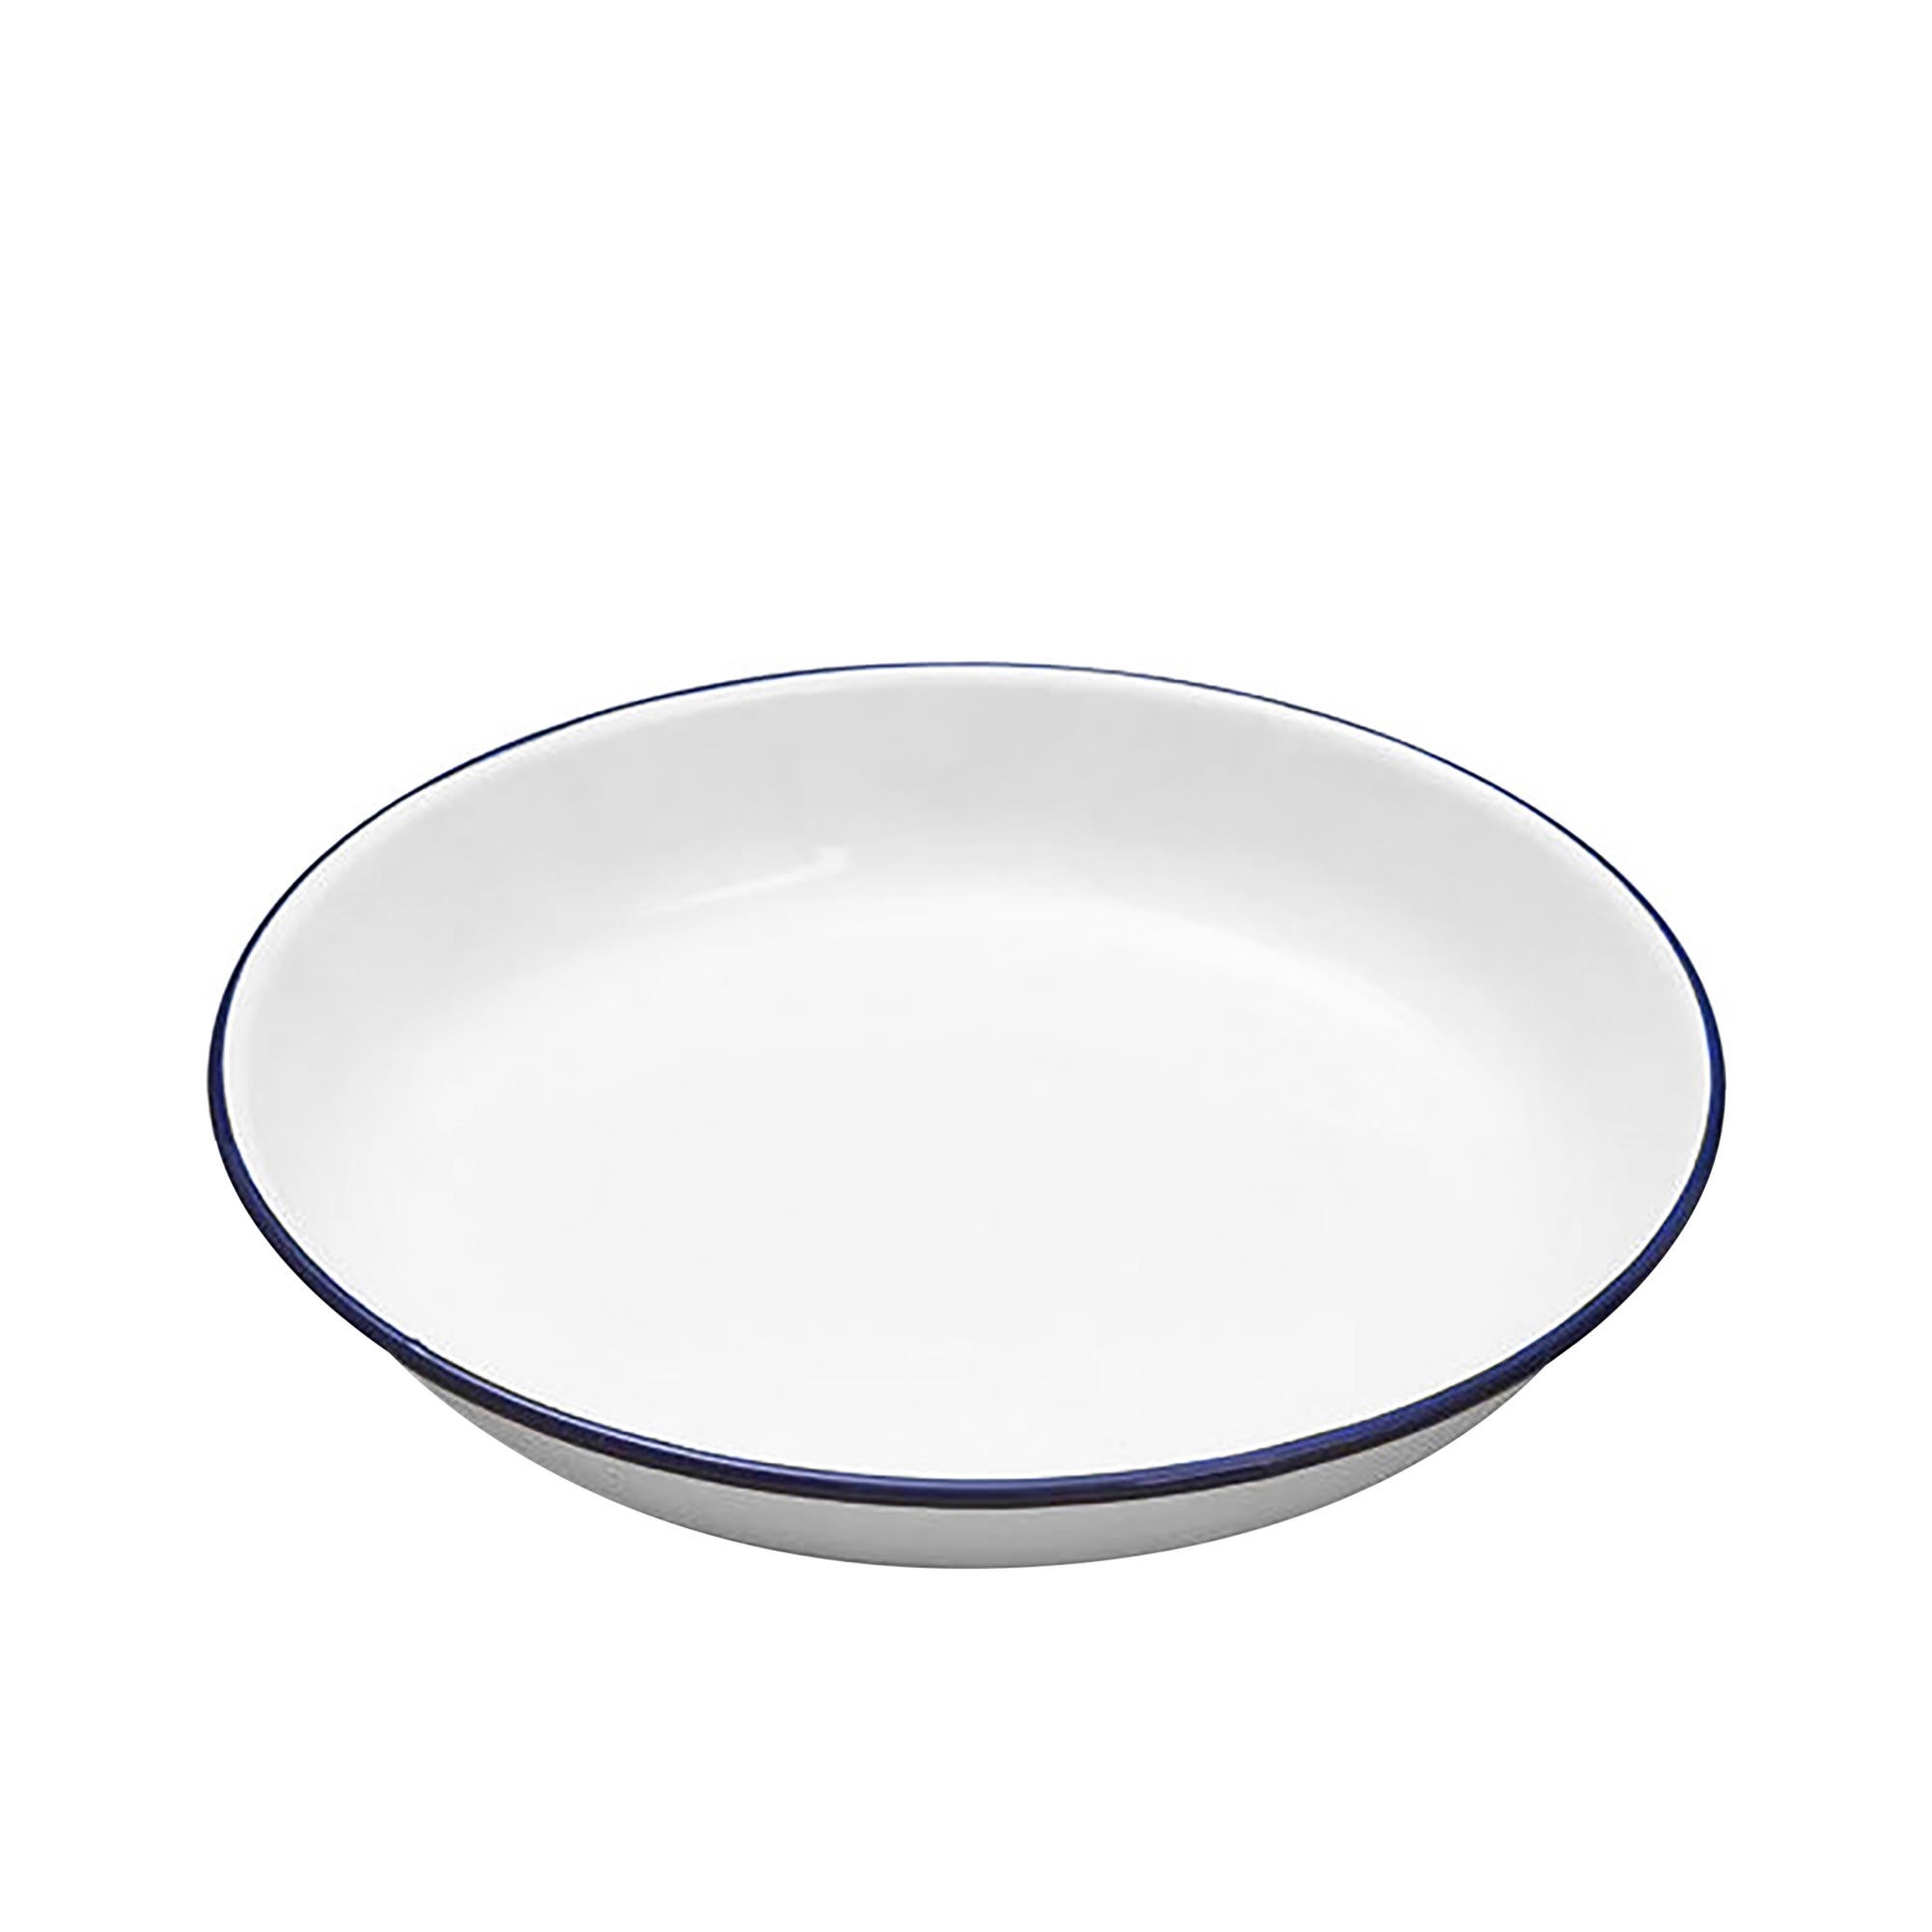 Falcon Enamelware Pasta Plate 24cm White Image 1